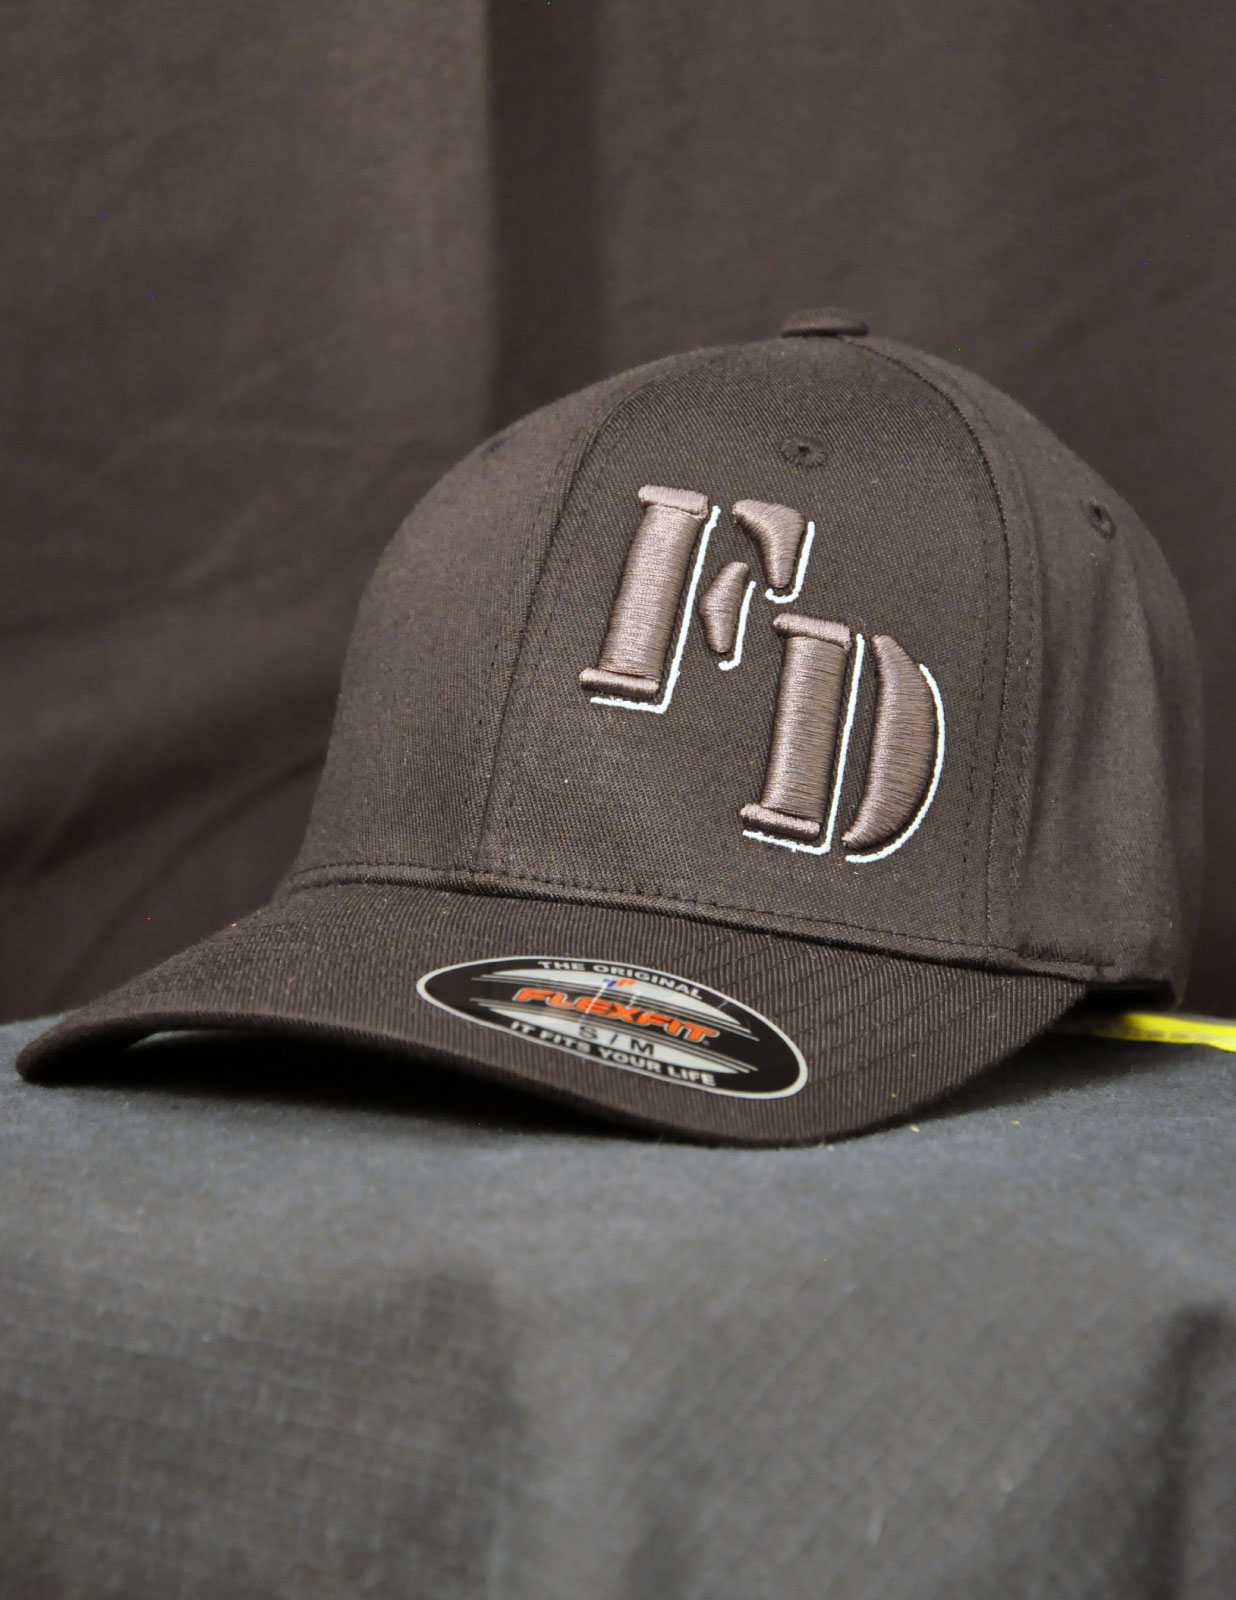 FD 3D Flex Fit Firefighter Hat (Charcoal on Black) - Black Helmet ...